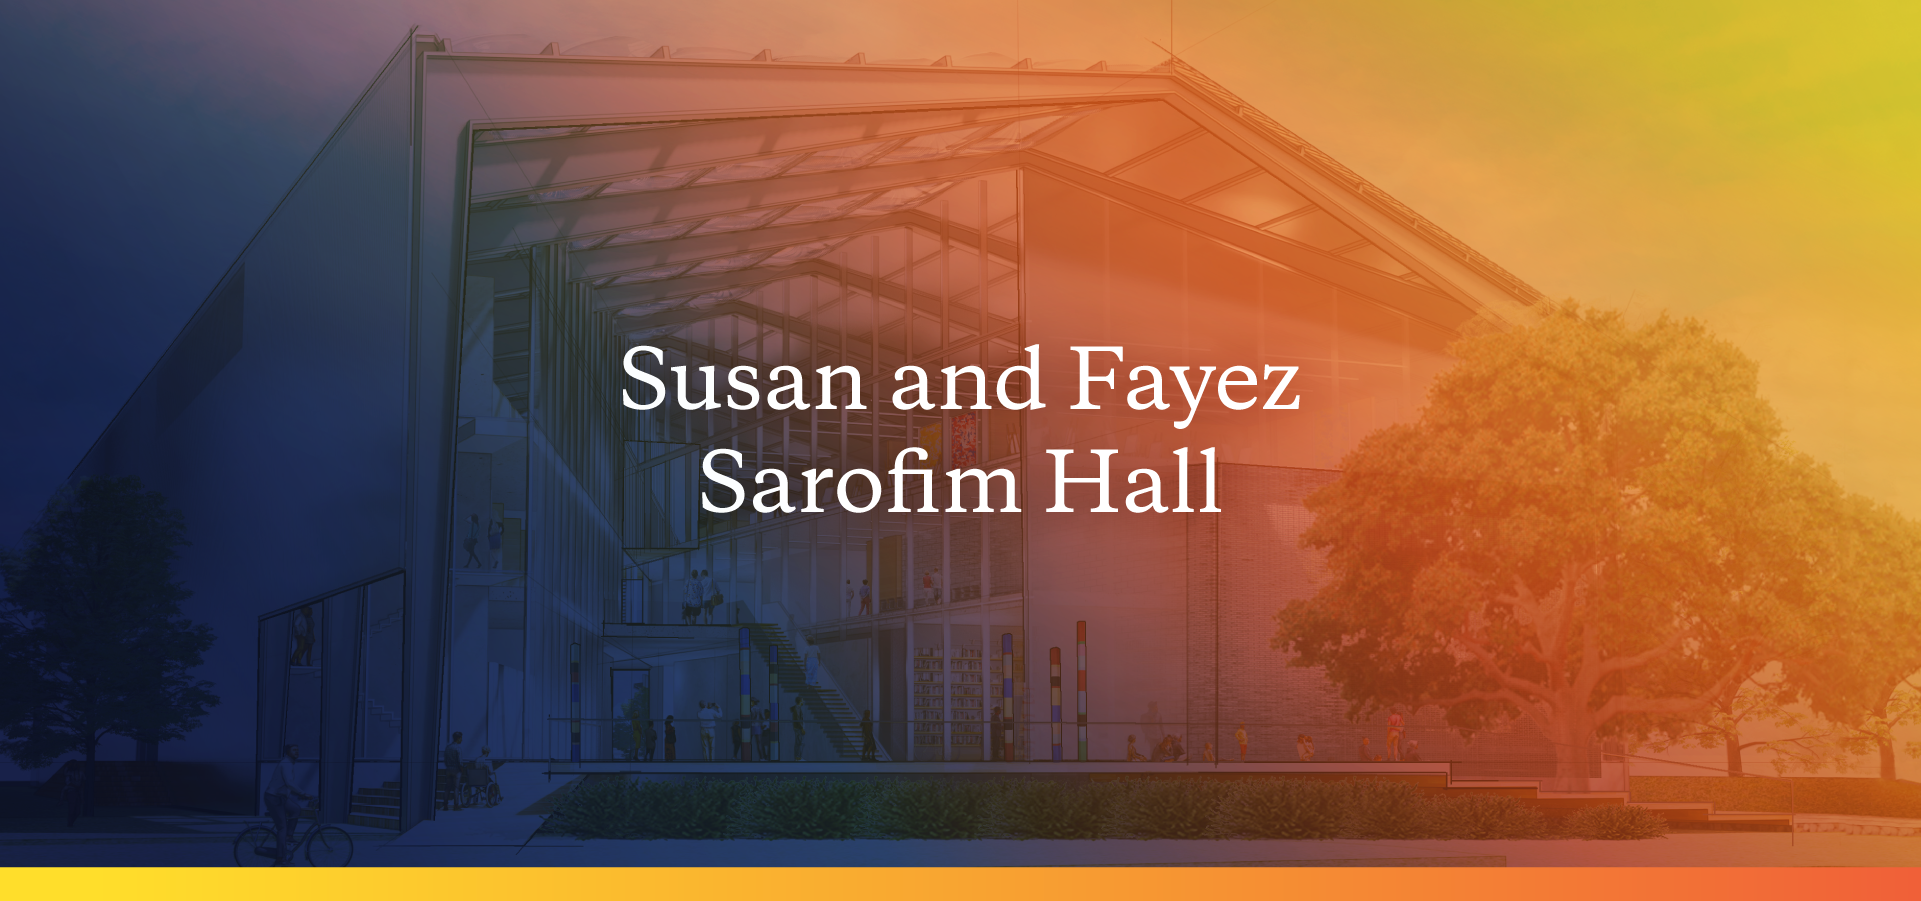 Susan and Fayez Sarofim Hall